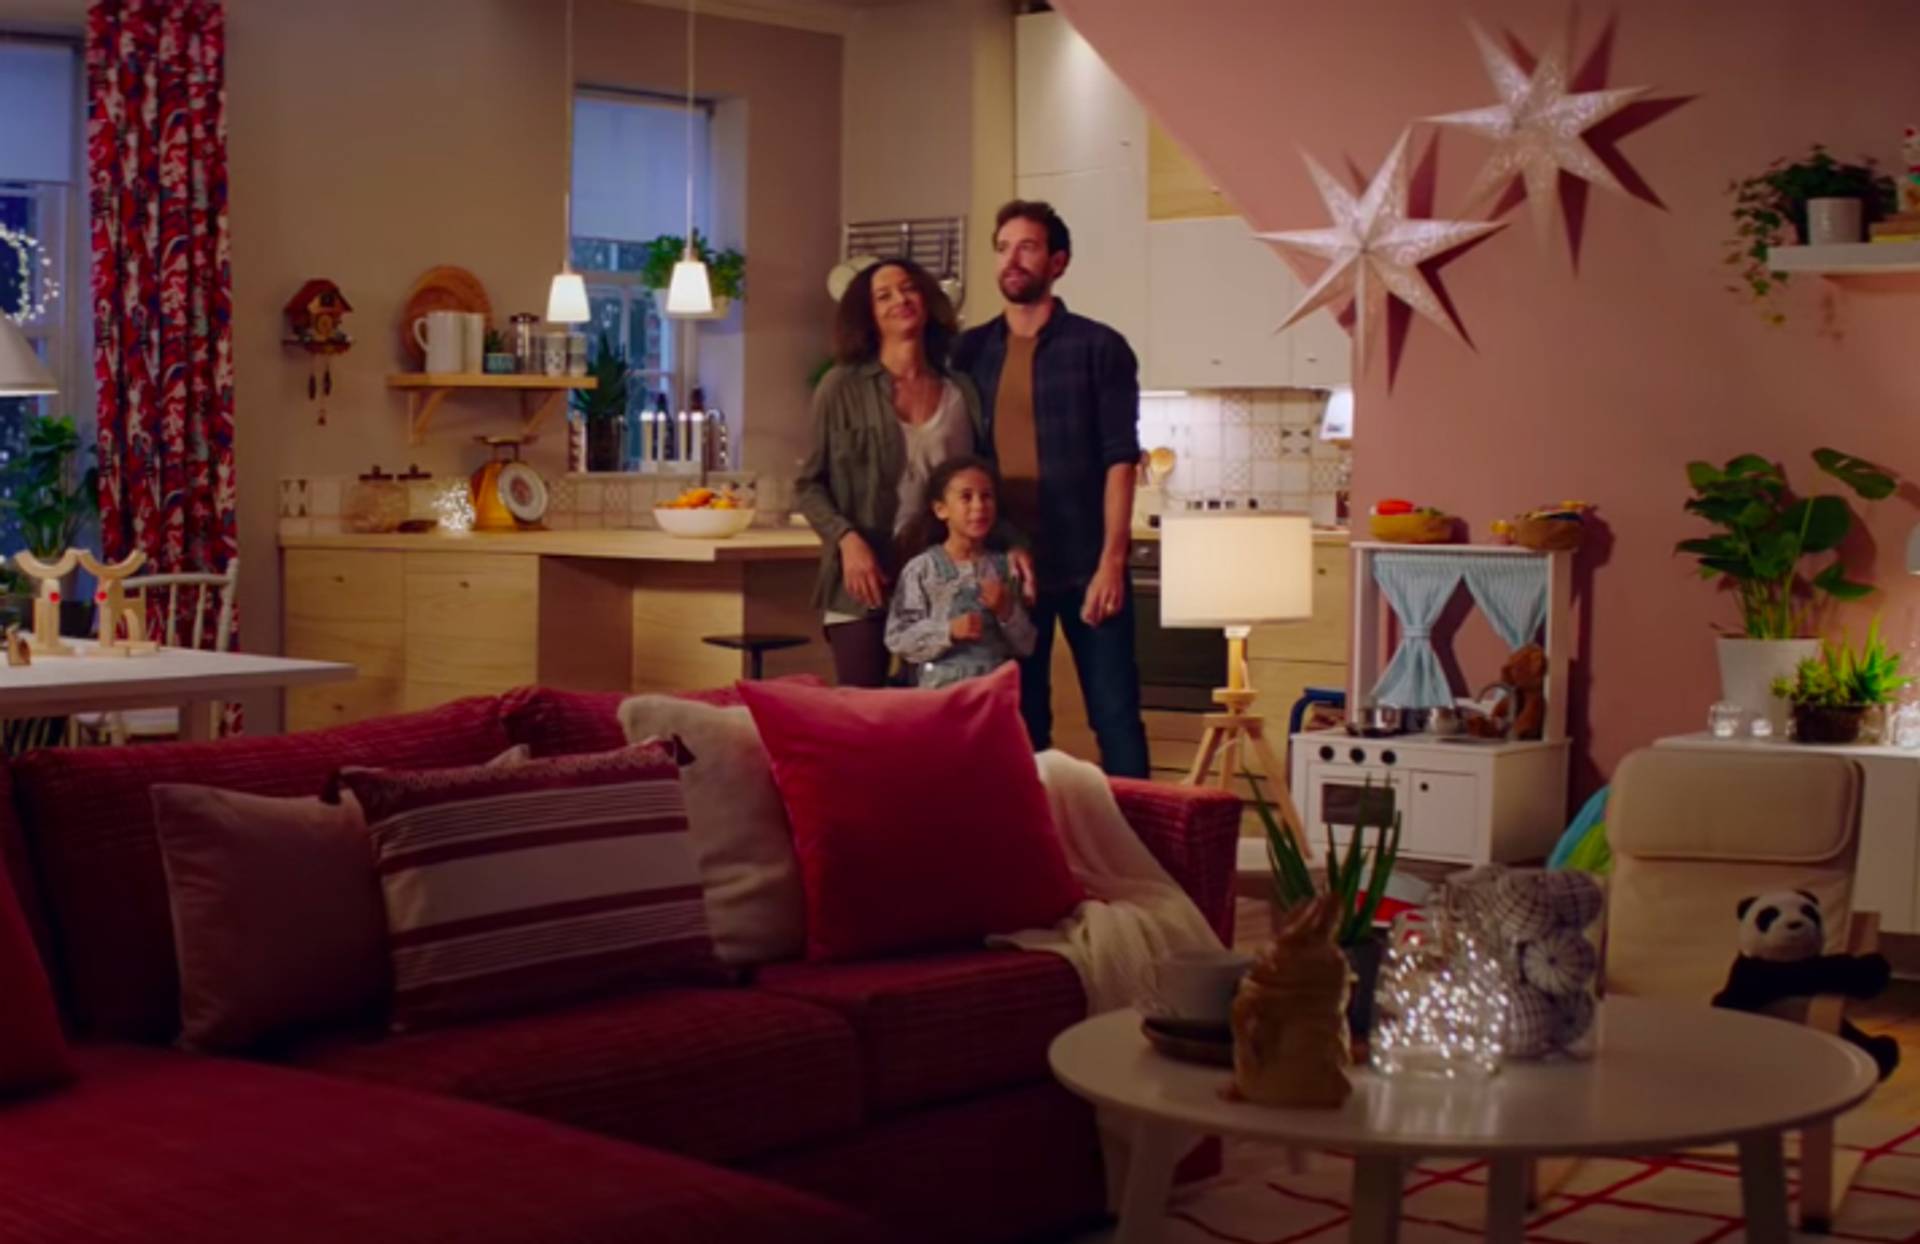 IKEA ad acknowledges ‘home shame’ stress at Xmas